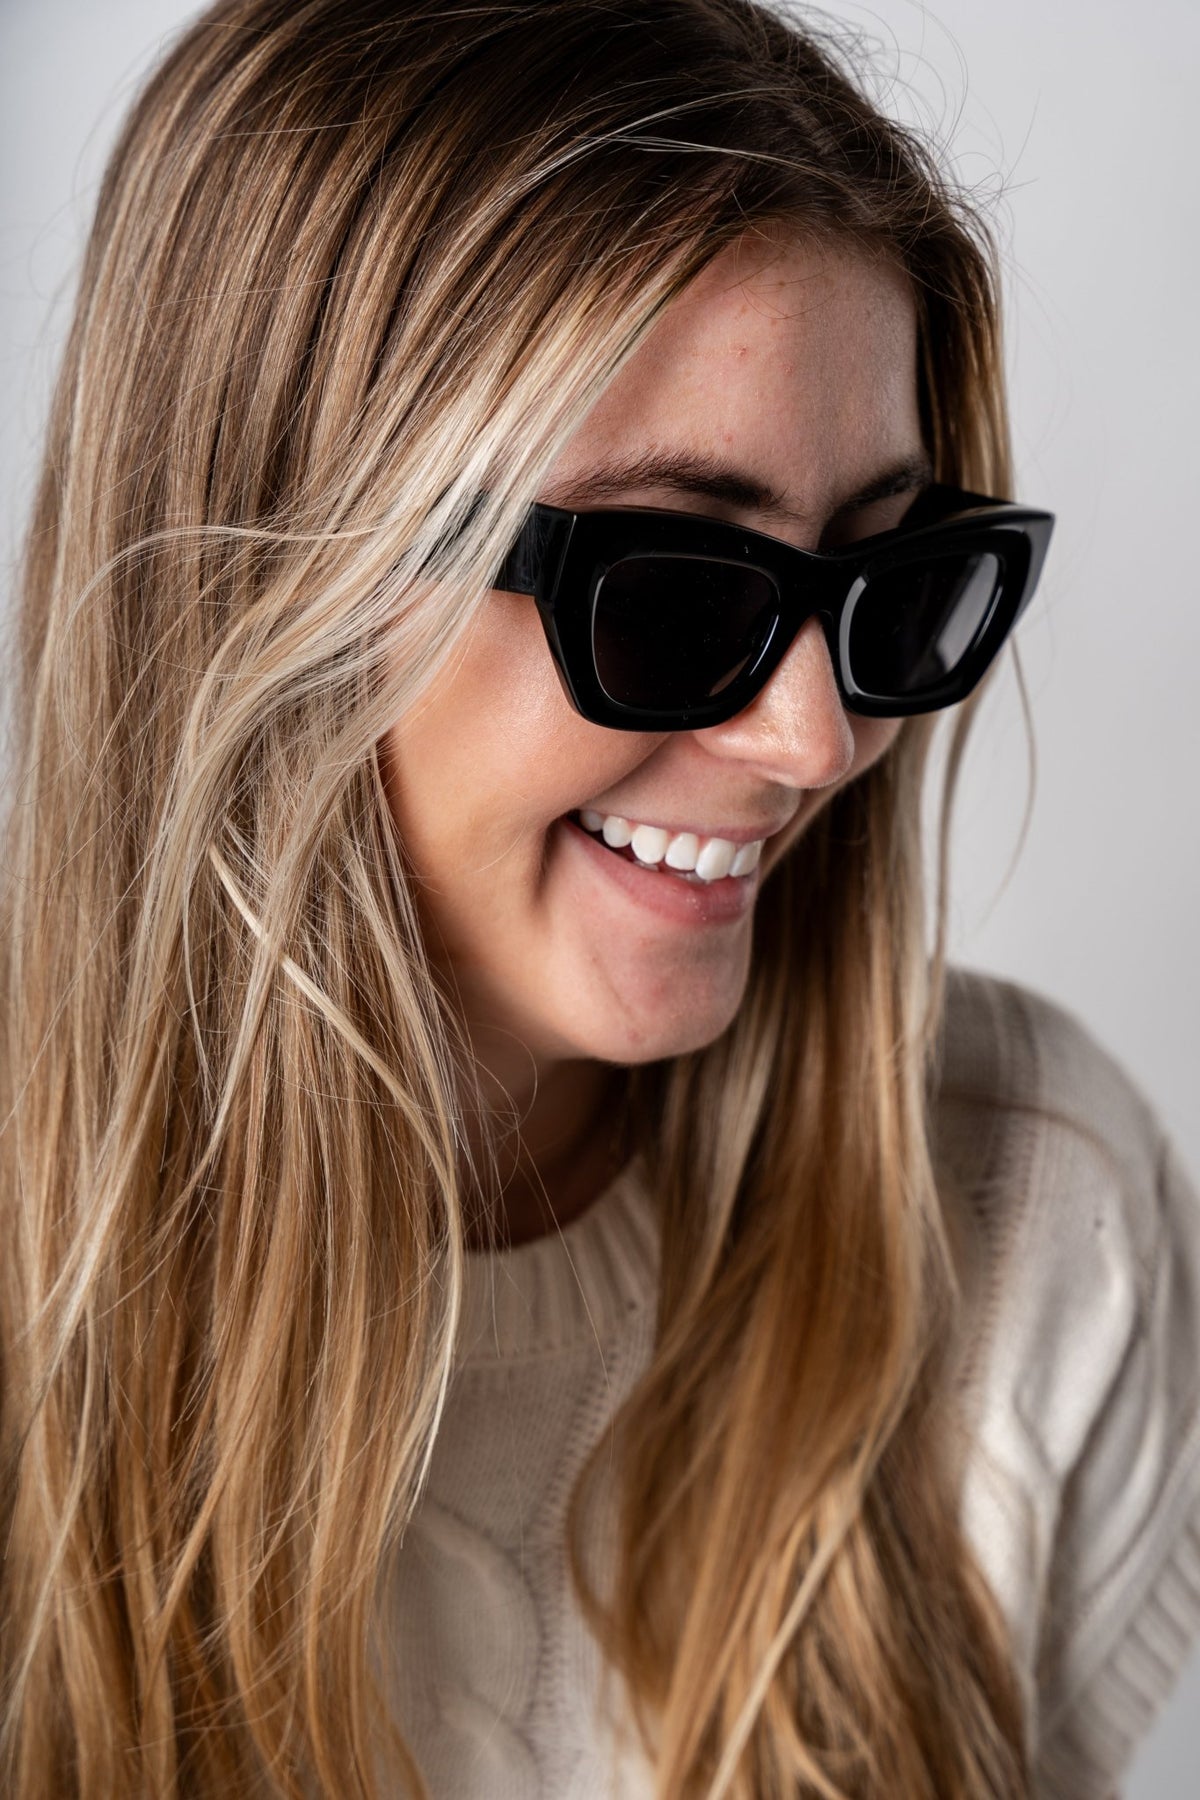 Freyrs Selina sunglasses black - Stylish Sunglasses - Trendy Glasses at Lush Fashion Lounge Boutique in Oklahoma